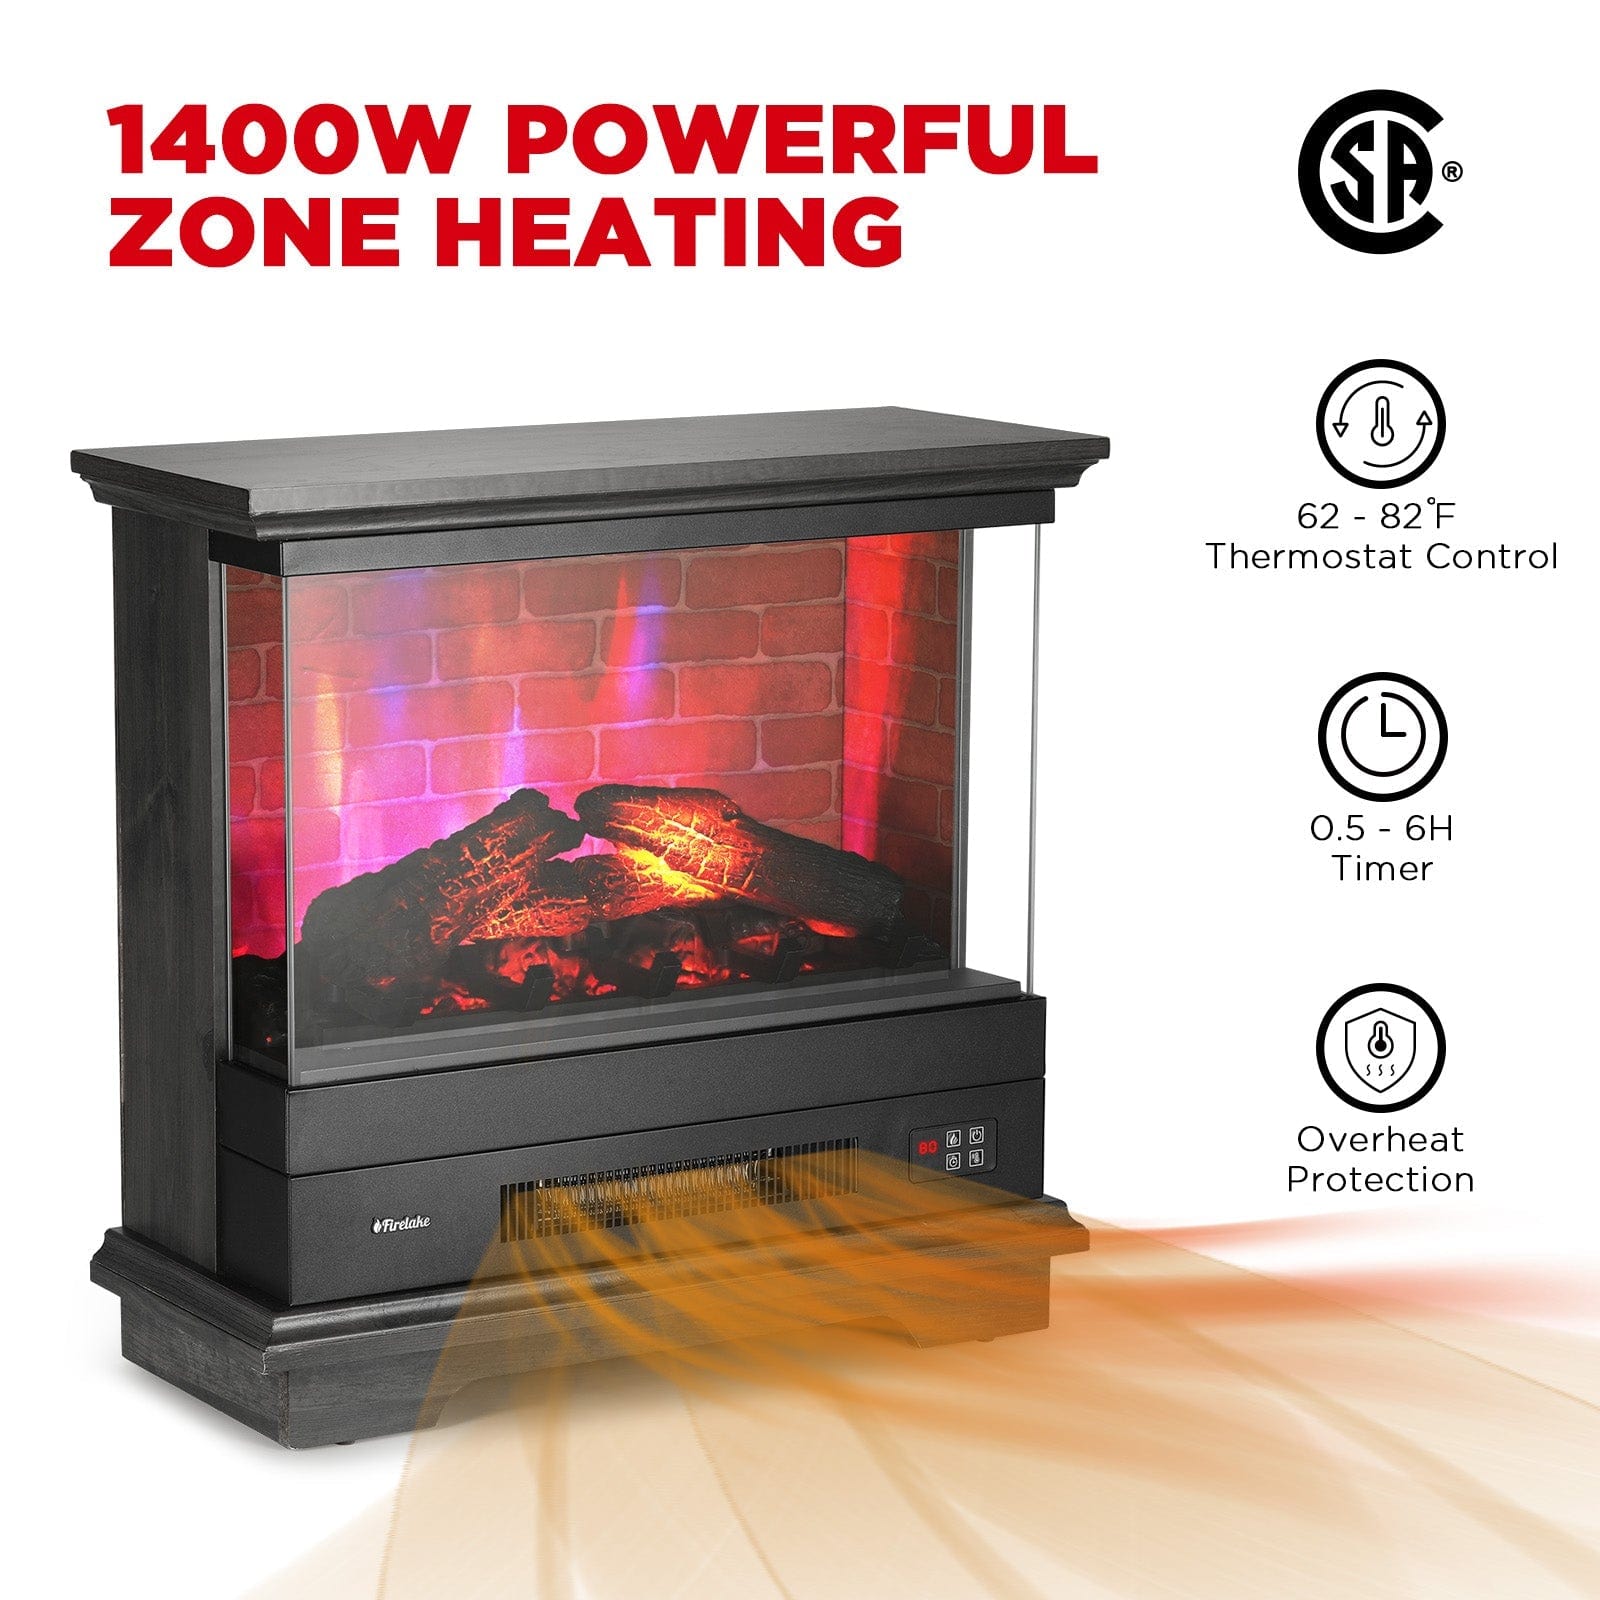 TURBRO Firelake FL27-BW Electric Fireplace Heater With Mantel Electric Fireplace with Mantel WiFi Enabled